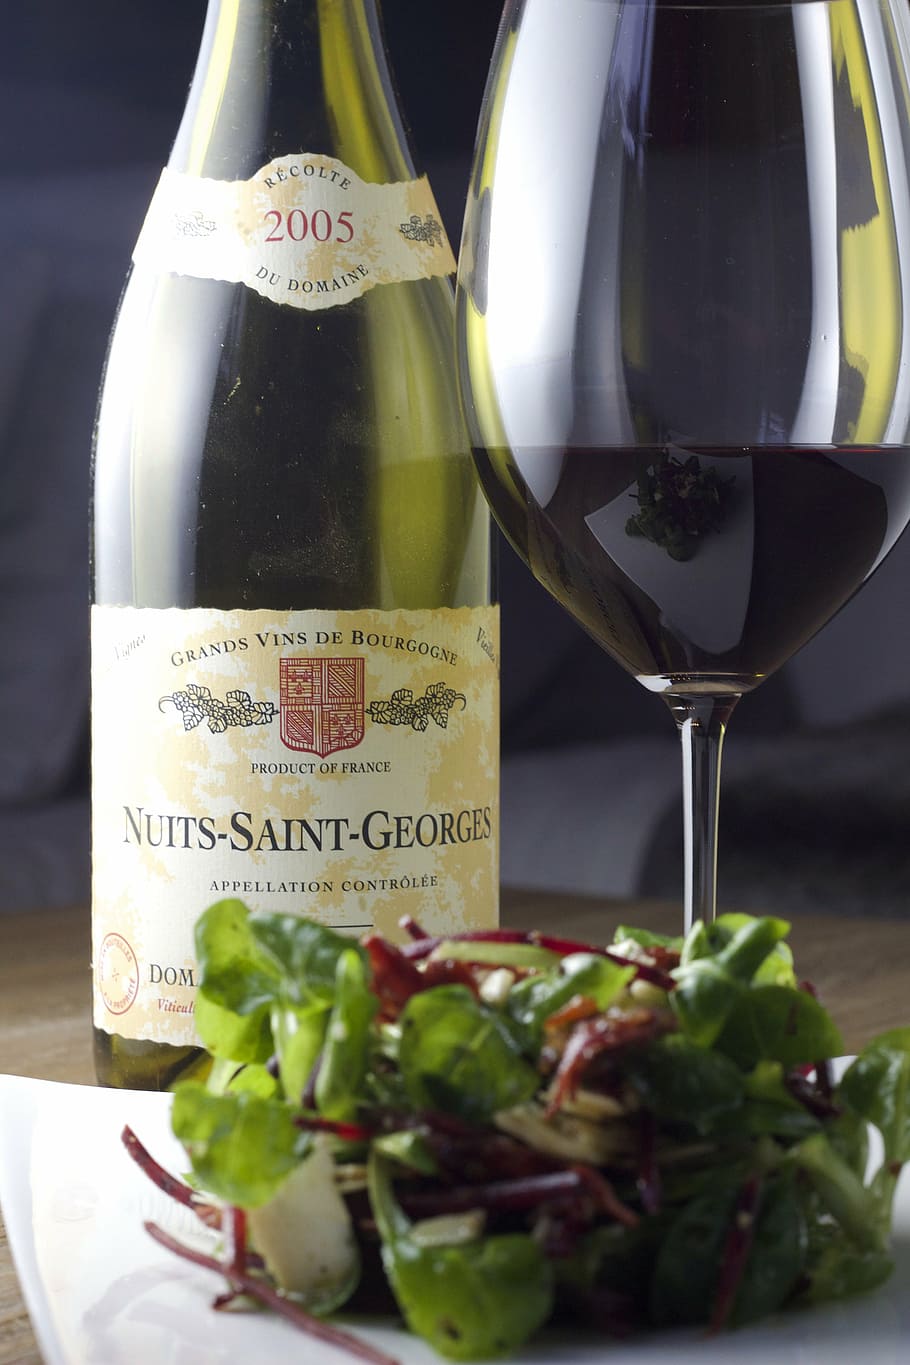 nuits-saint-georges bottle, plate, wine glass, leafy, vegetables, dinner, salad, wine, glass, bottle